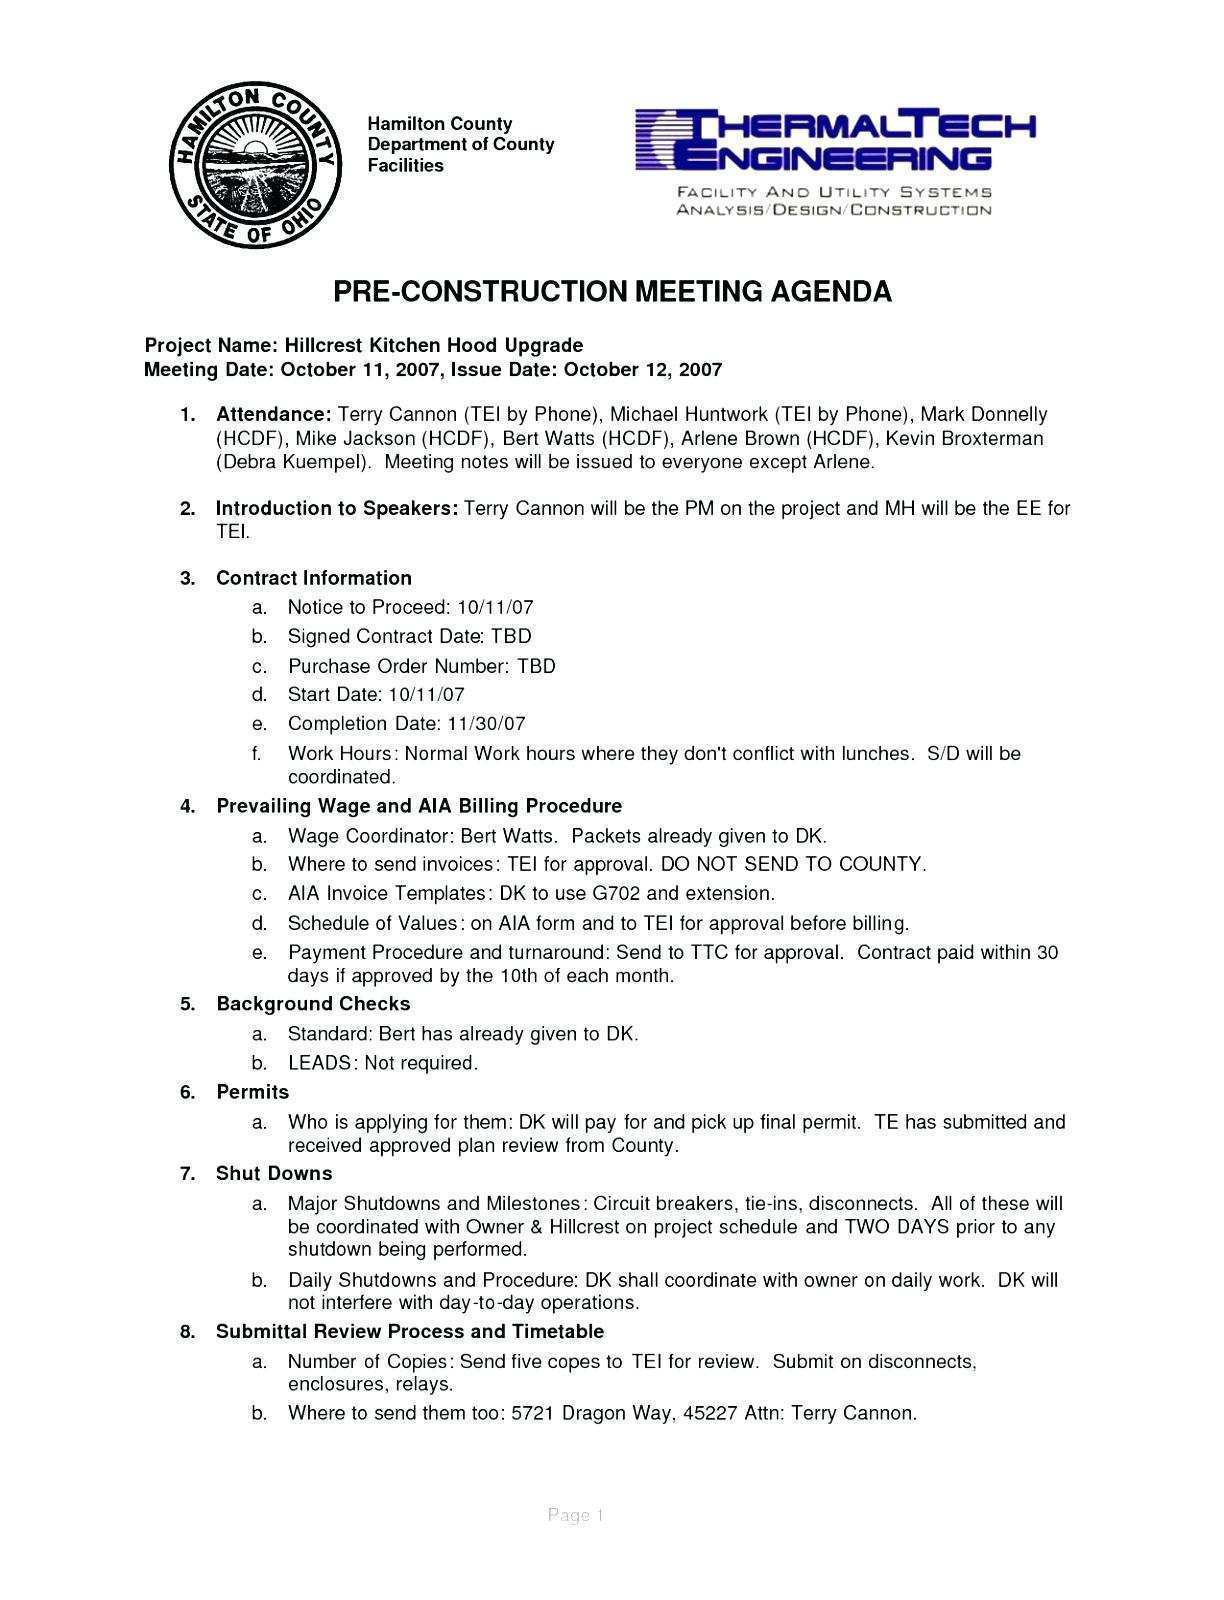 Construction Meeting Agenda Template